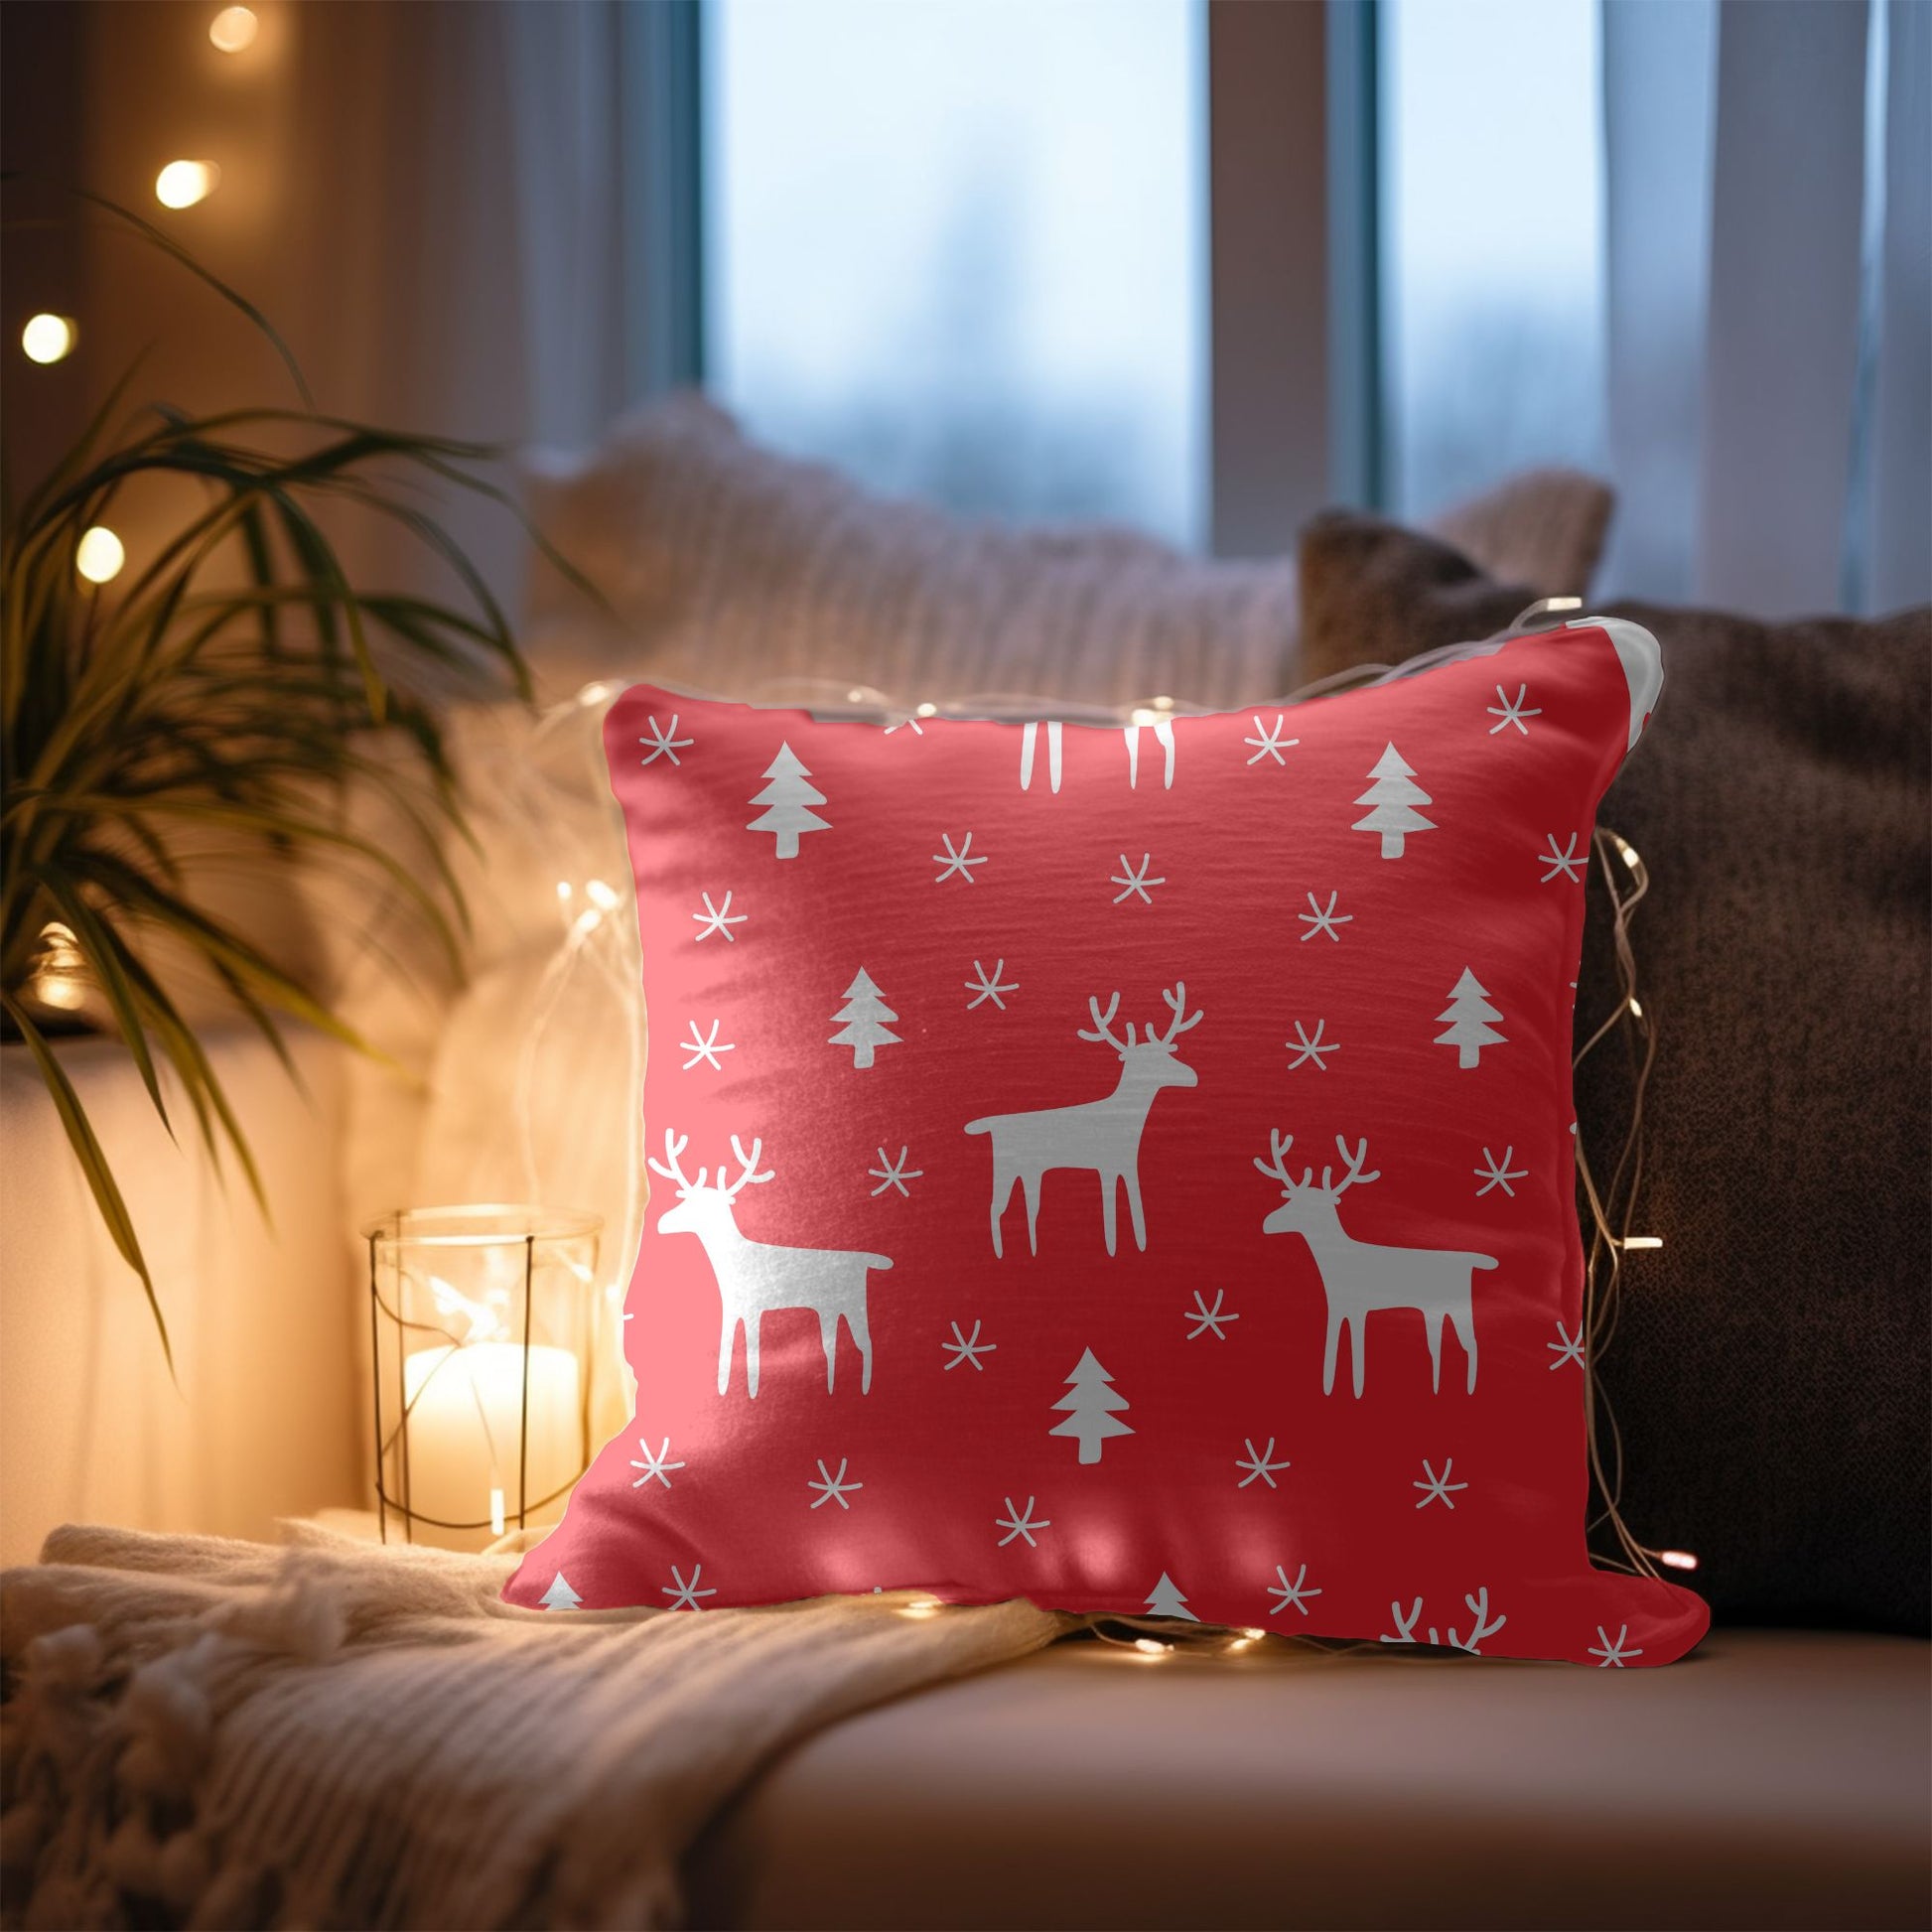 Homeezone's Red Christmas Decoration Throw Pillow